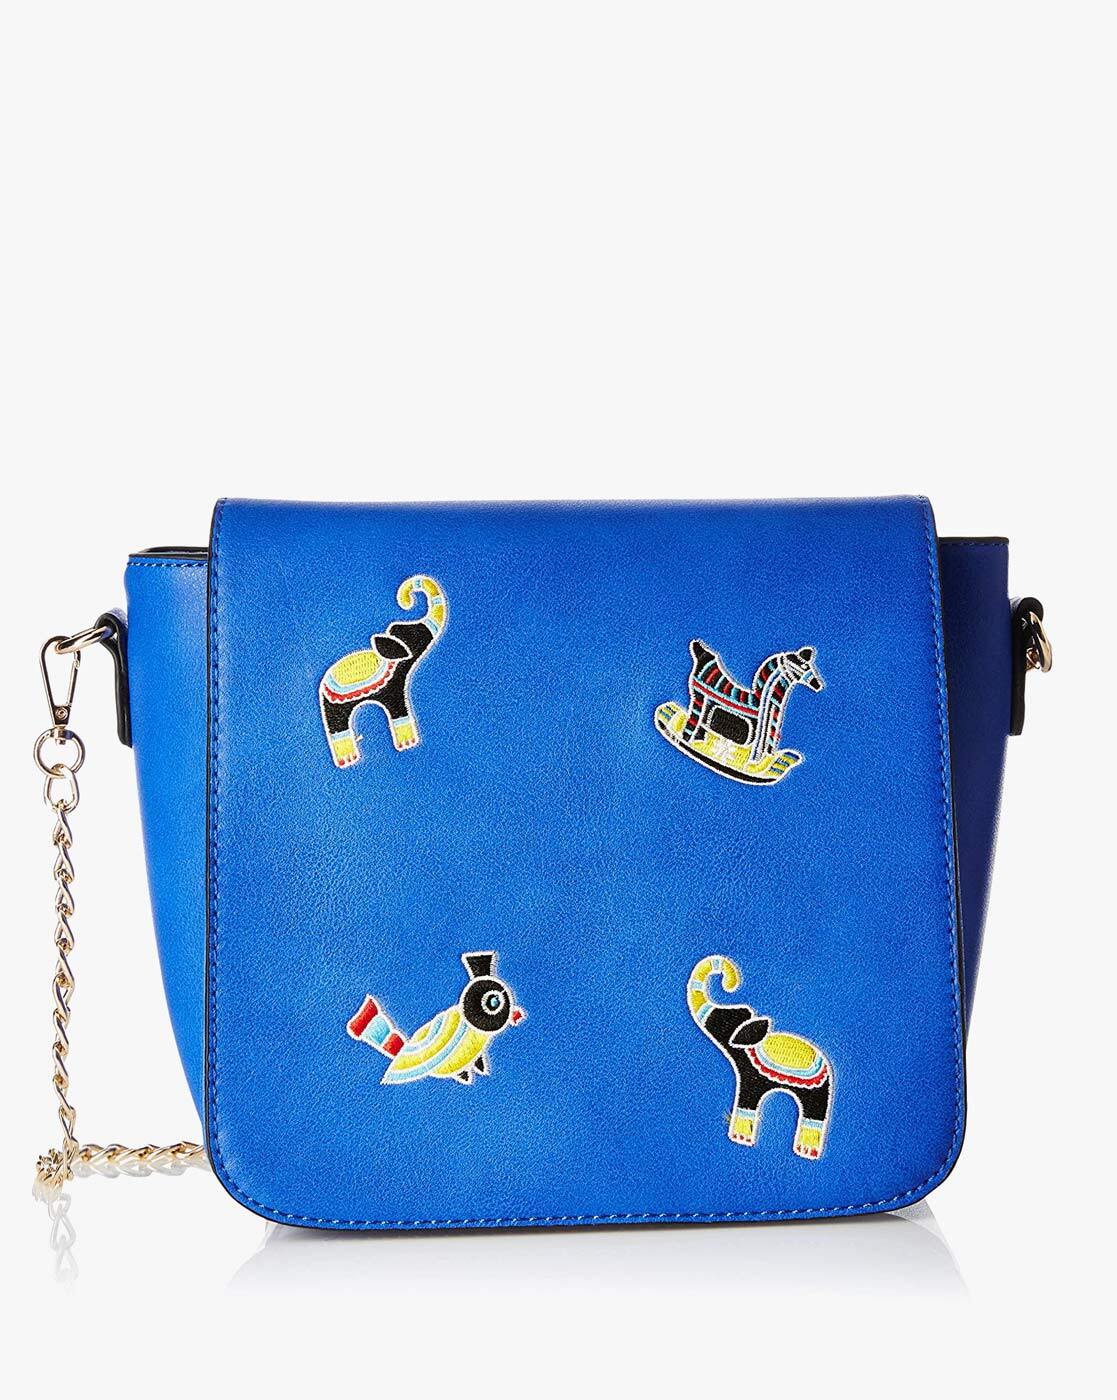 Blue purse. | Blue purse, Purses, Blue